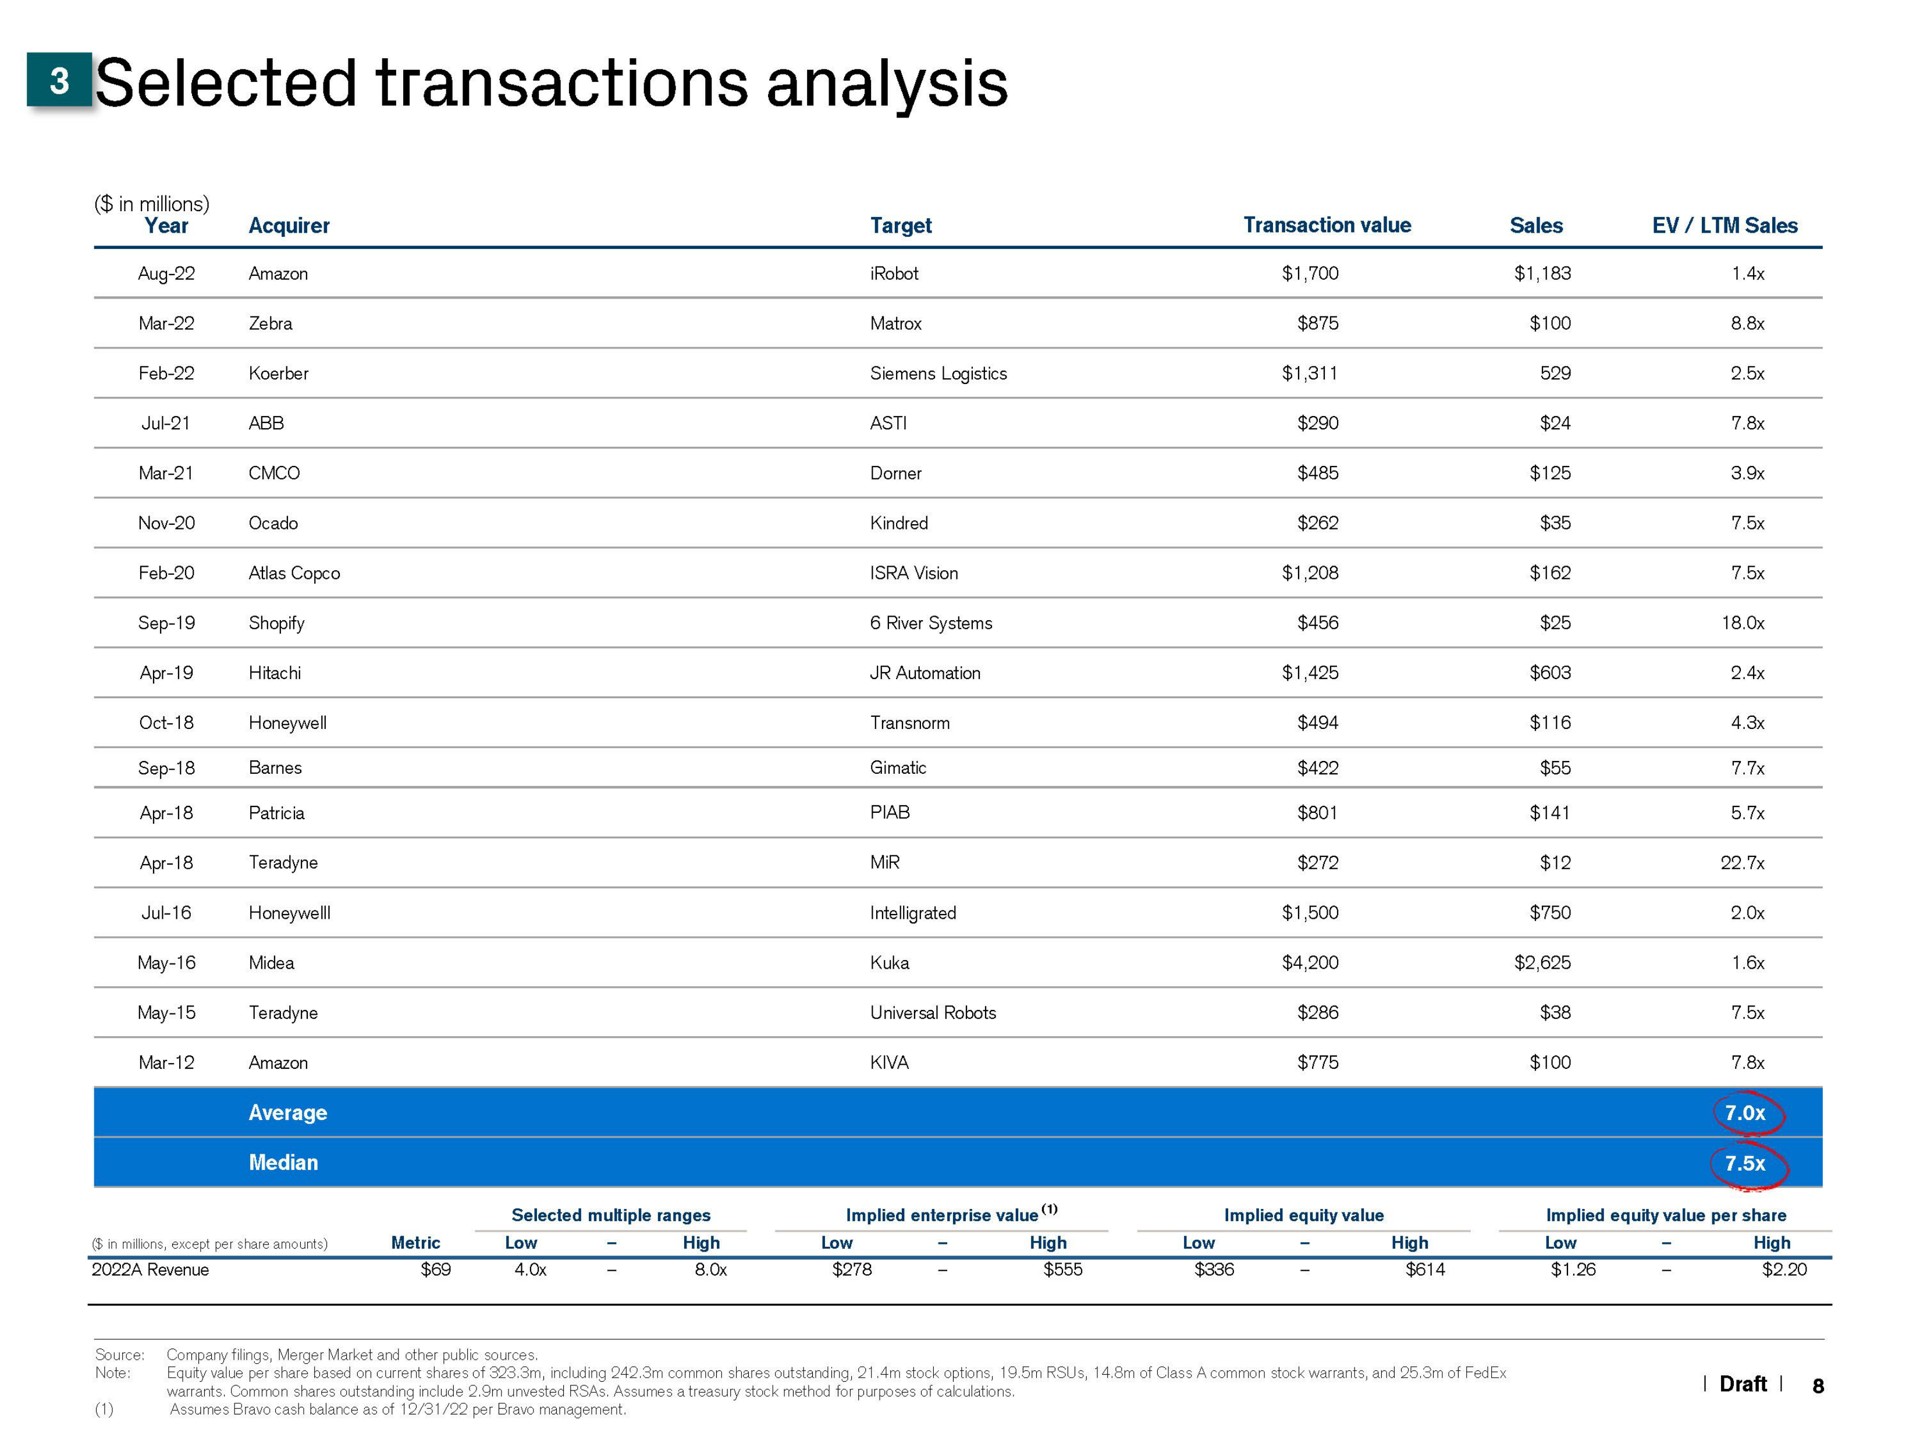 transactions analysis | Credit Suisse